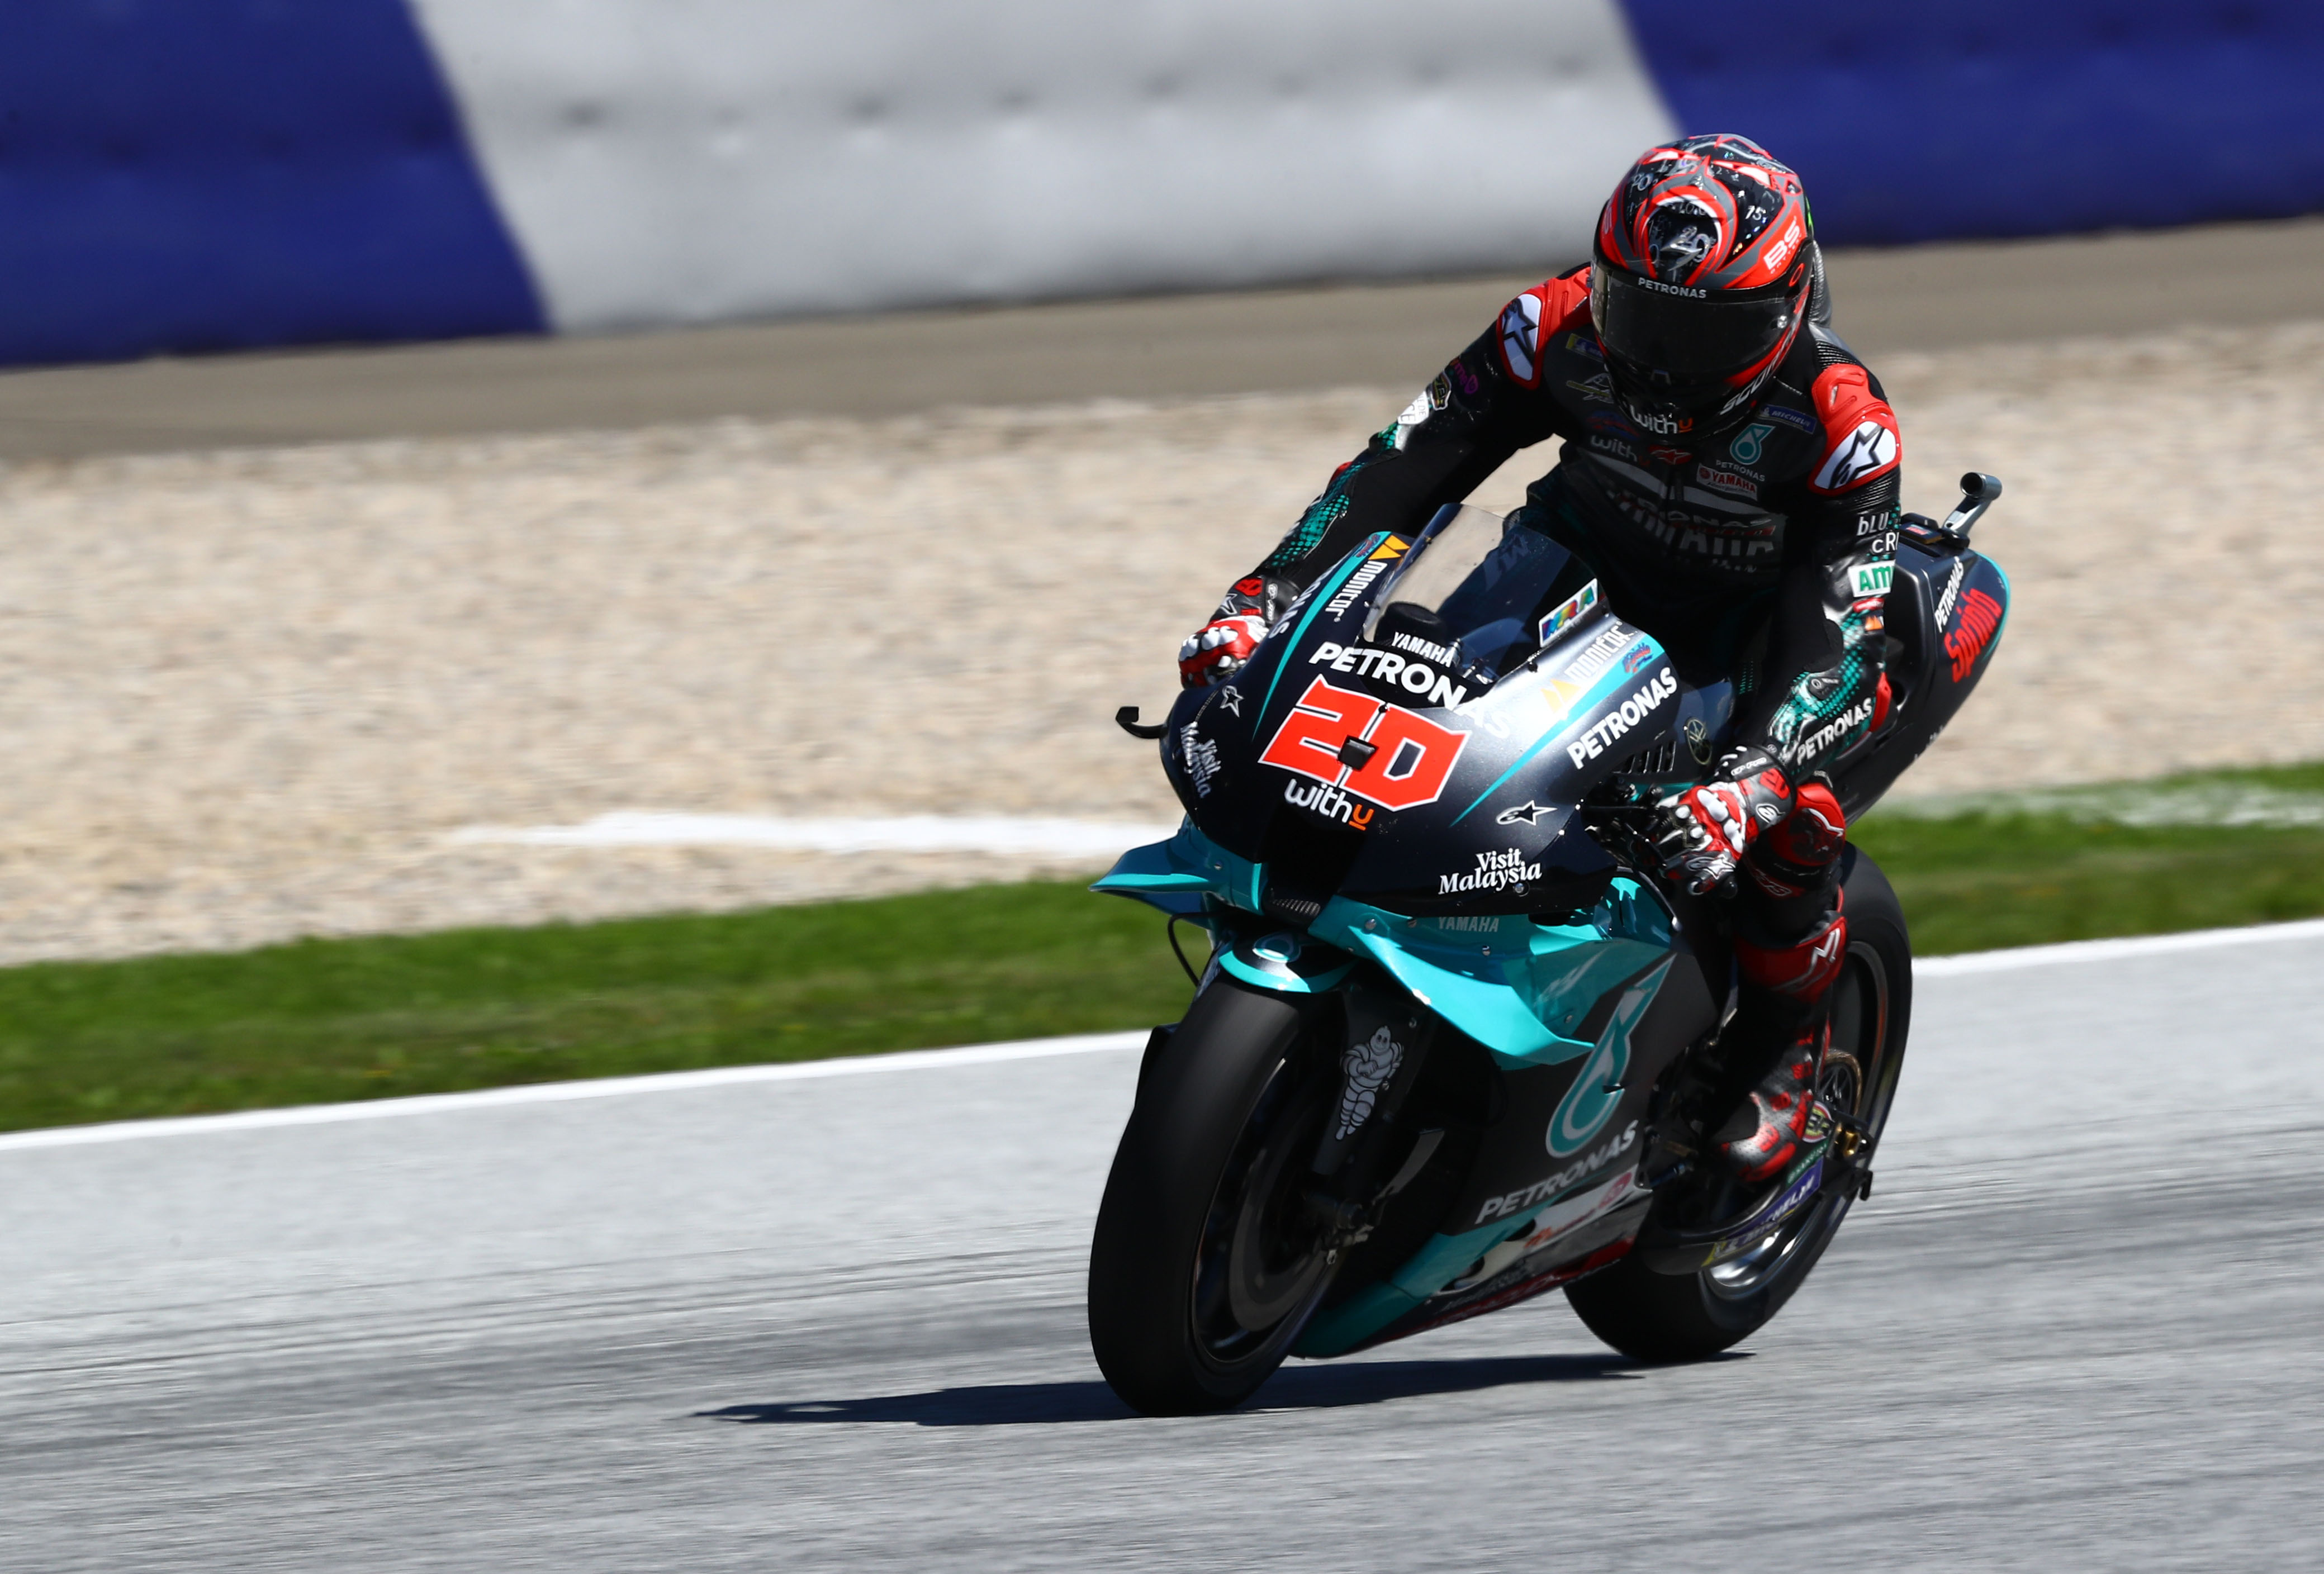 Quartararo has ‘very bad feeling’ on the Yamaha in Austria - The Race